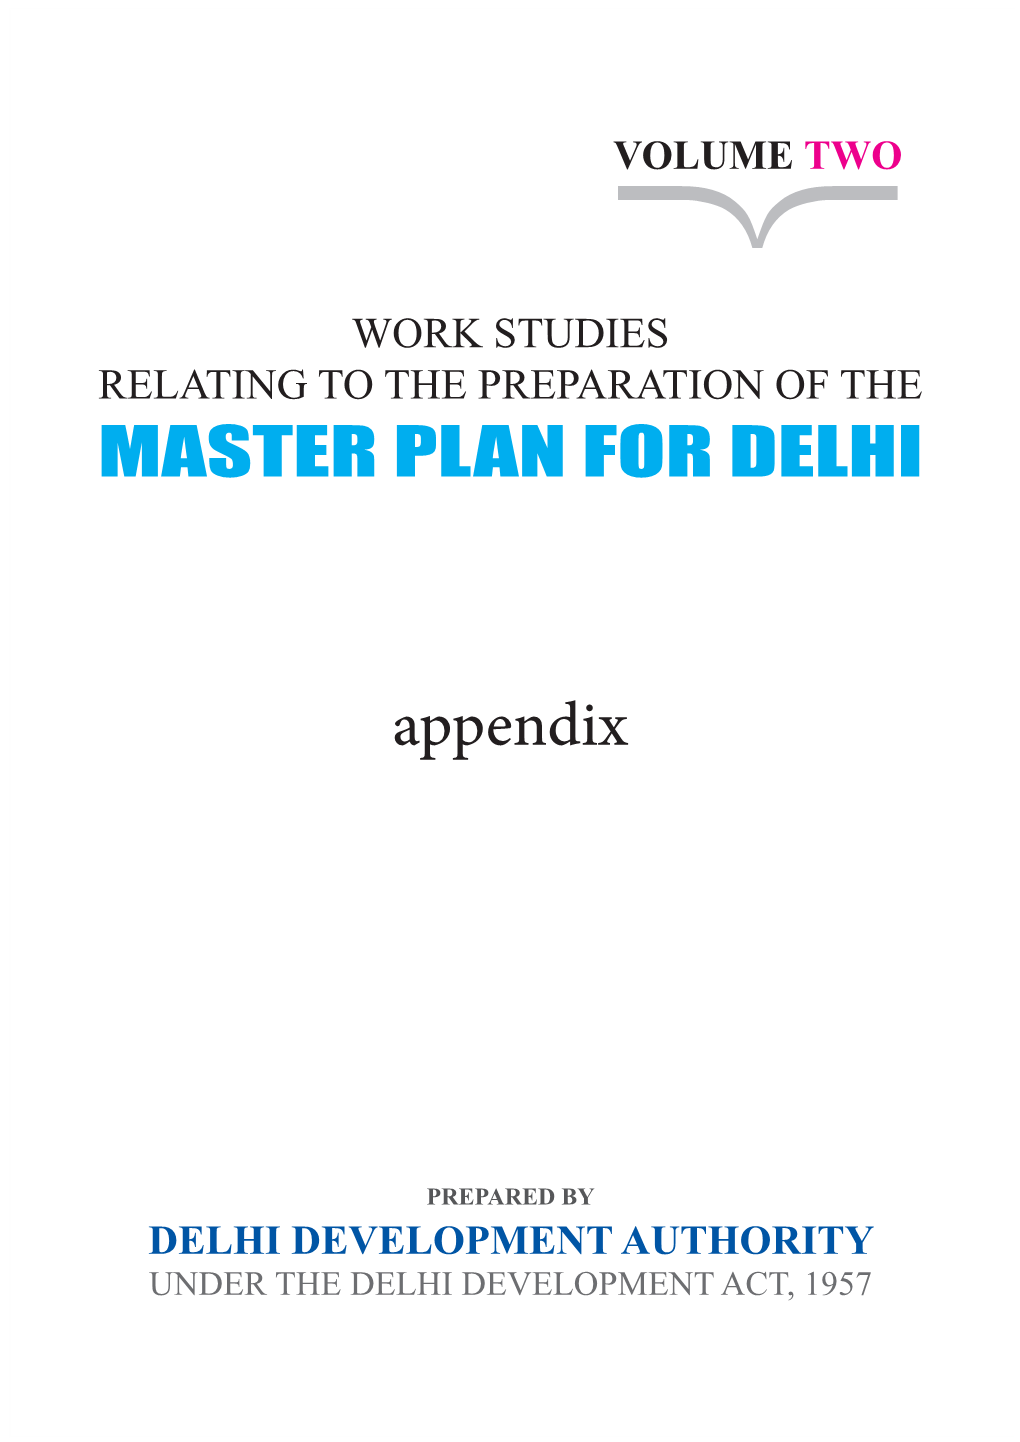 Master Plan for Delhi